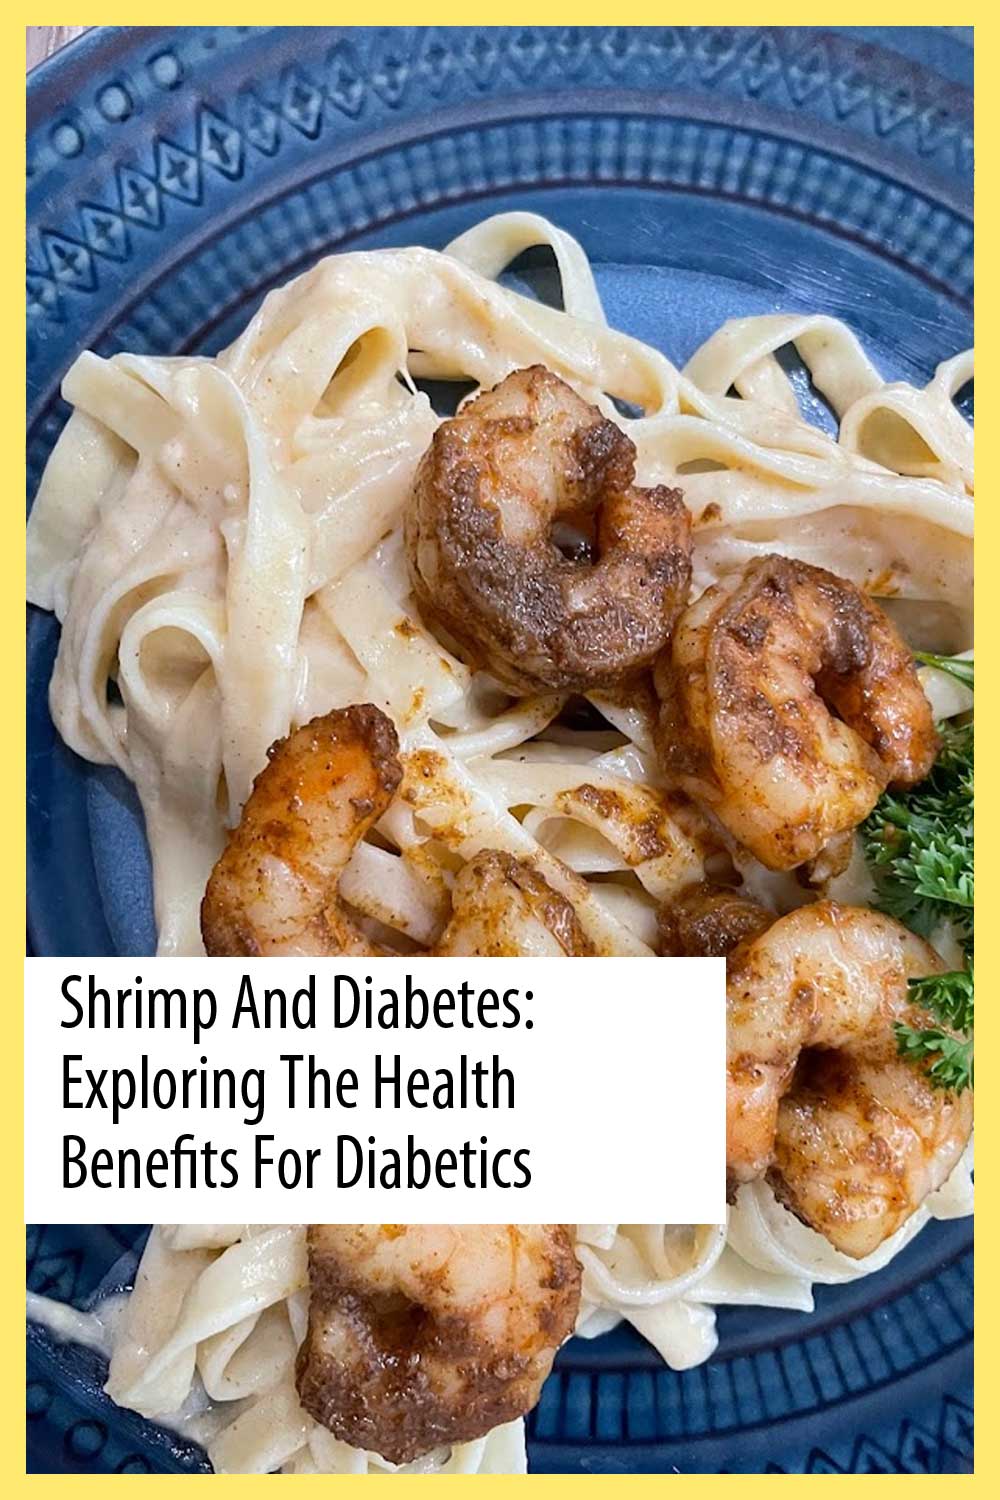 Shrimp and Diabetes: Exploring the Health Benefits for Diabetics